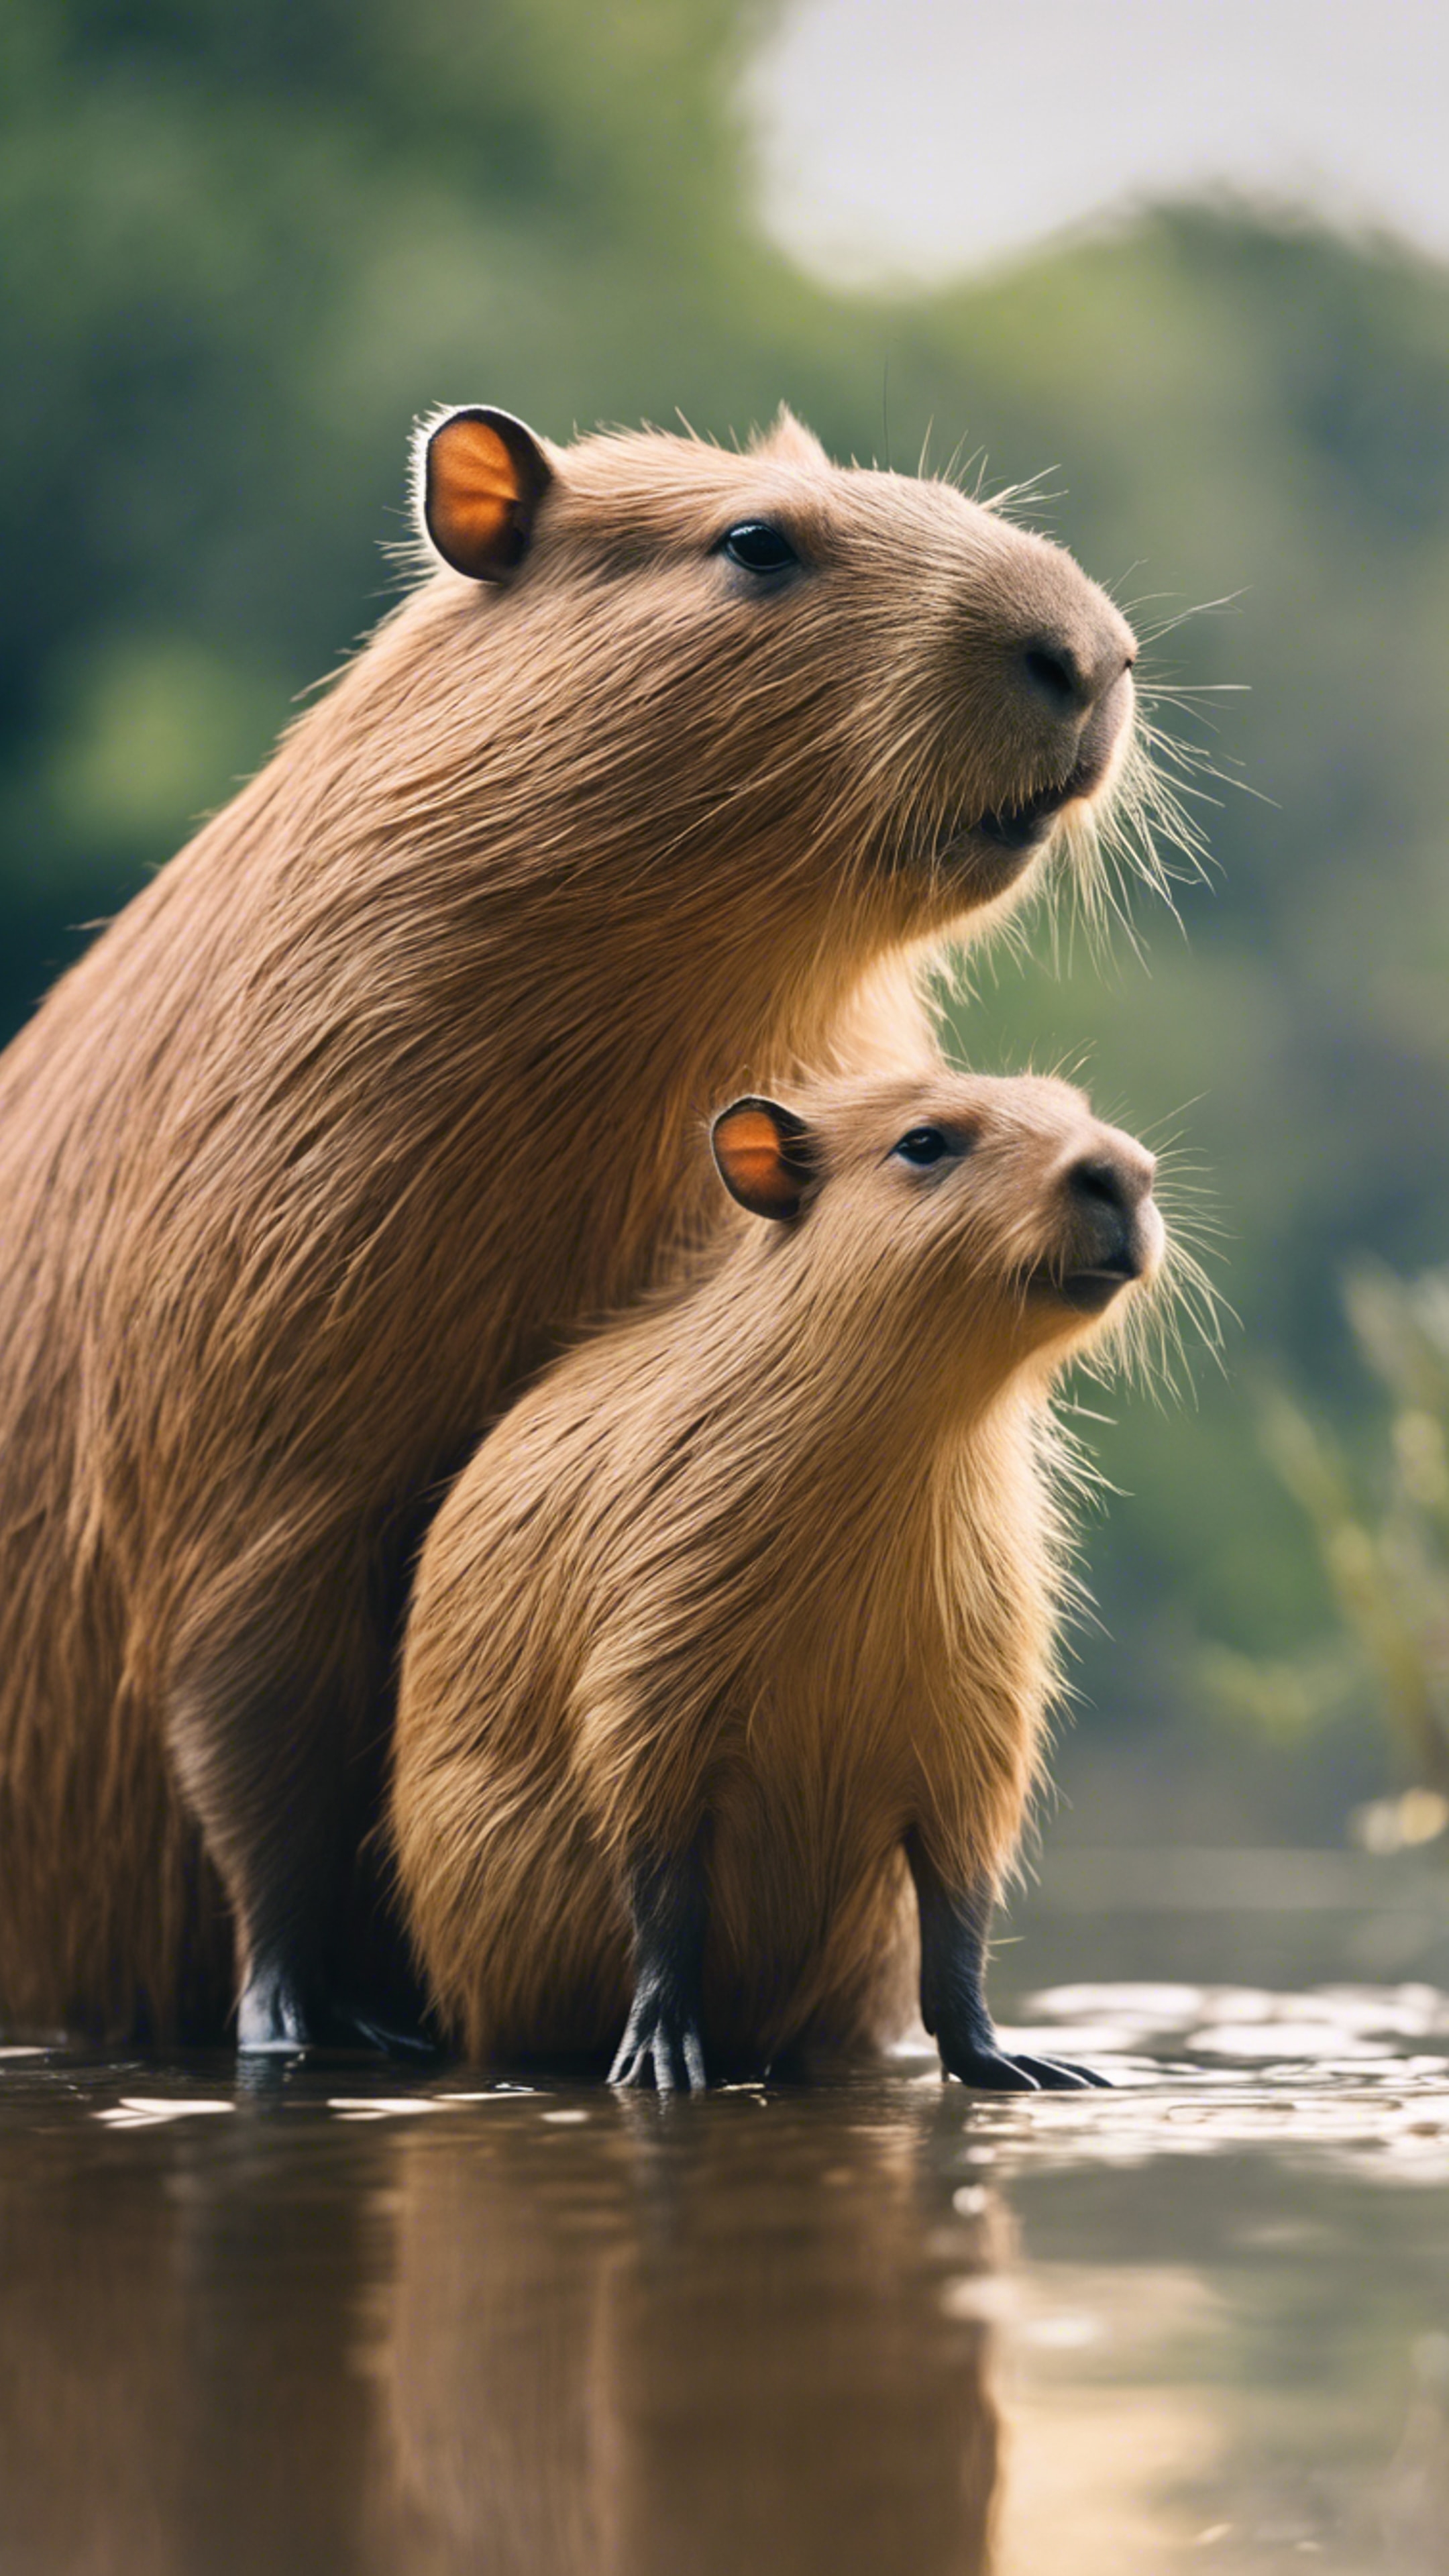 An image capturing the profound bond between a capybara mother and her newborn.壁紙[3e1d78ec86be474cadc5]